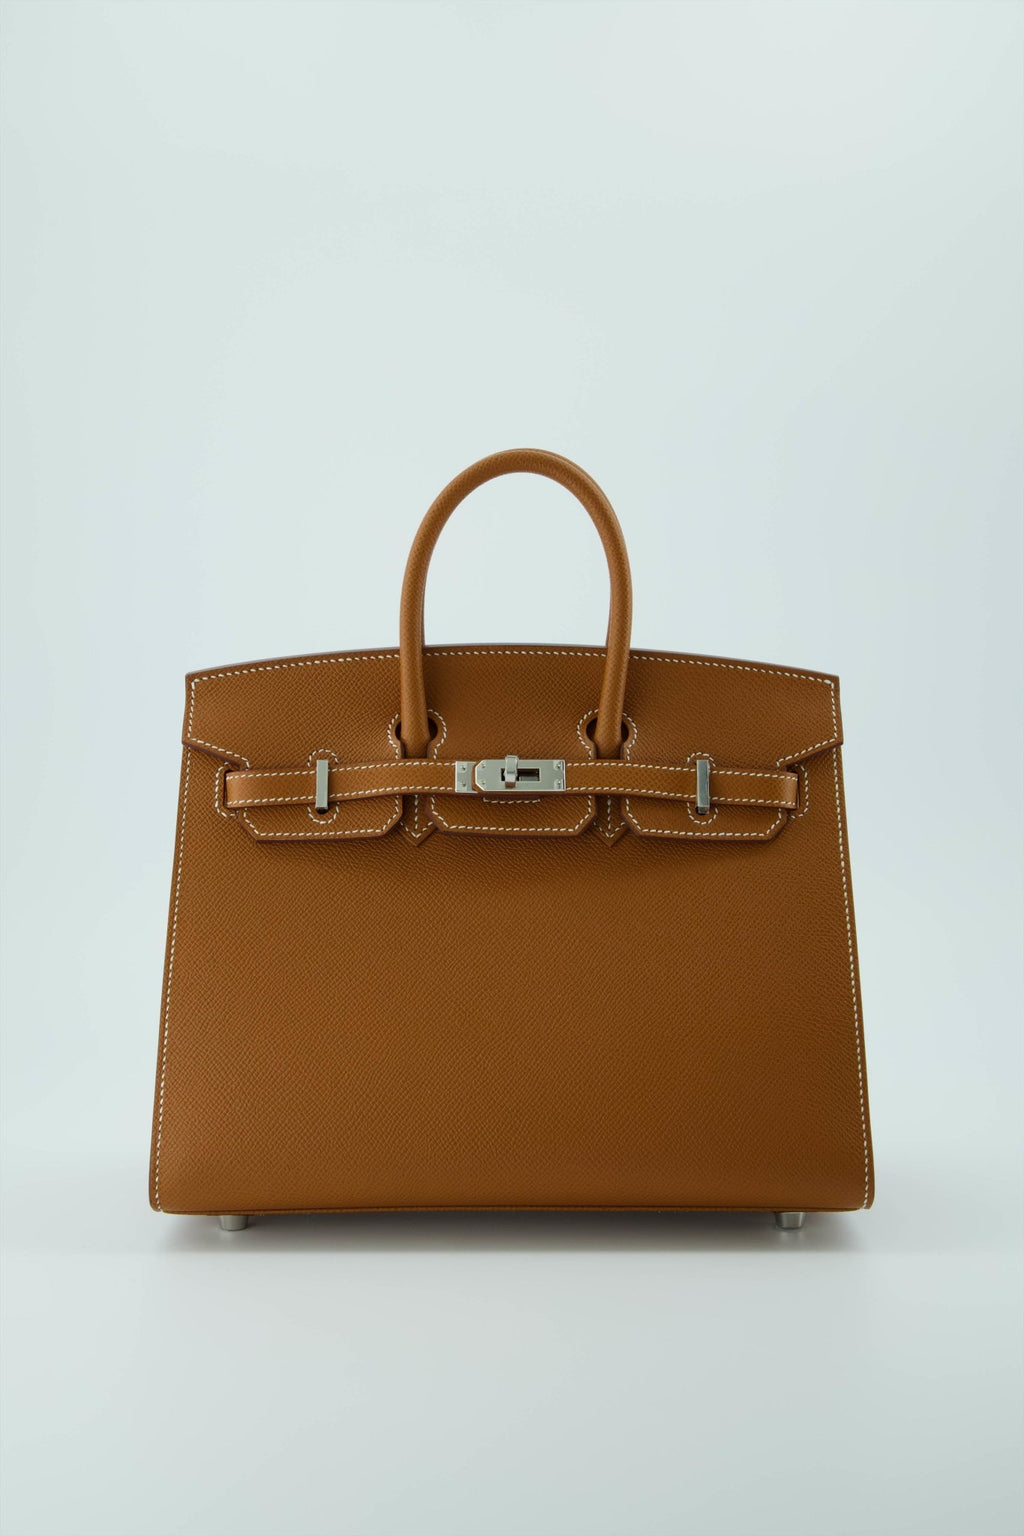 HERMÈS Birkin Sellier 25 handbag in Black Epsom leather with Gold